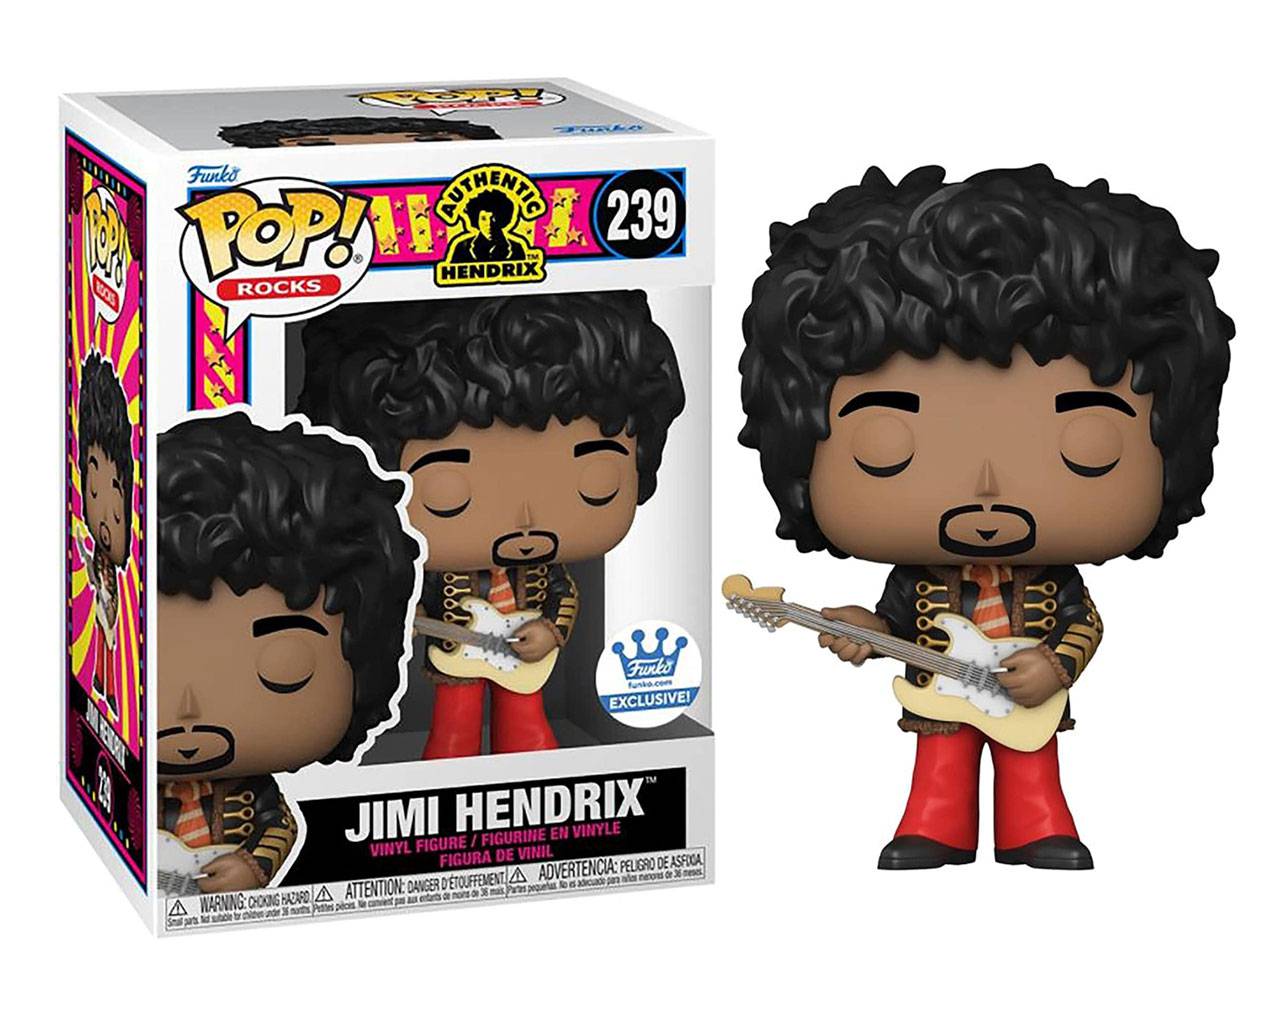 Jimi Hendrix (Funko-Shop Exclusive) - Authentic Hendrix Pop! Vinyl